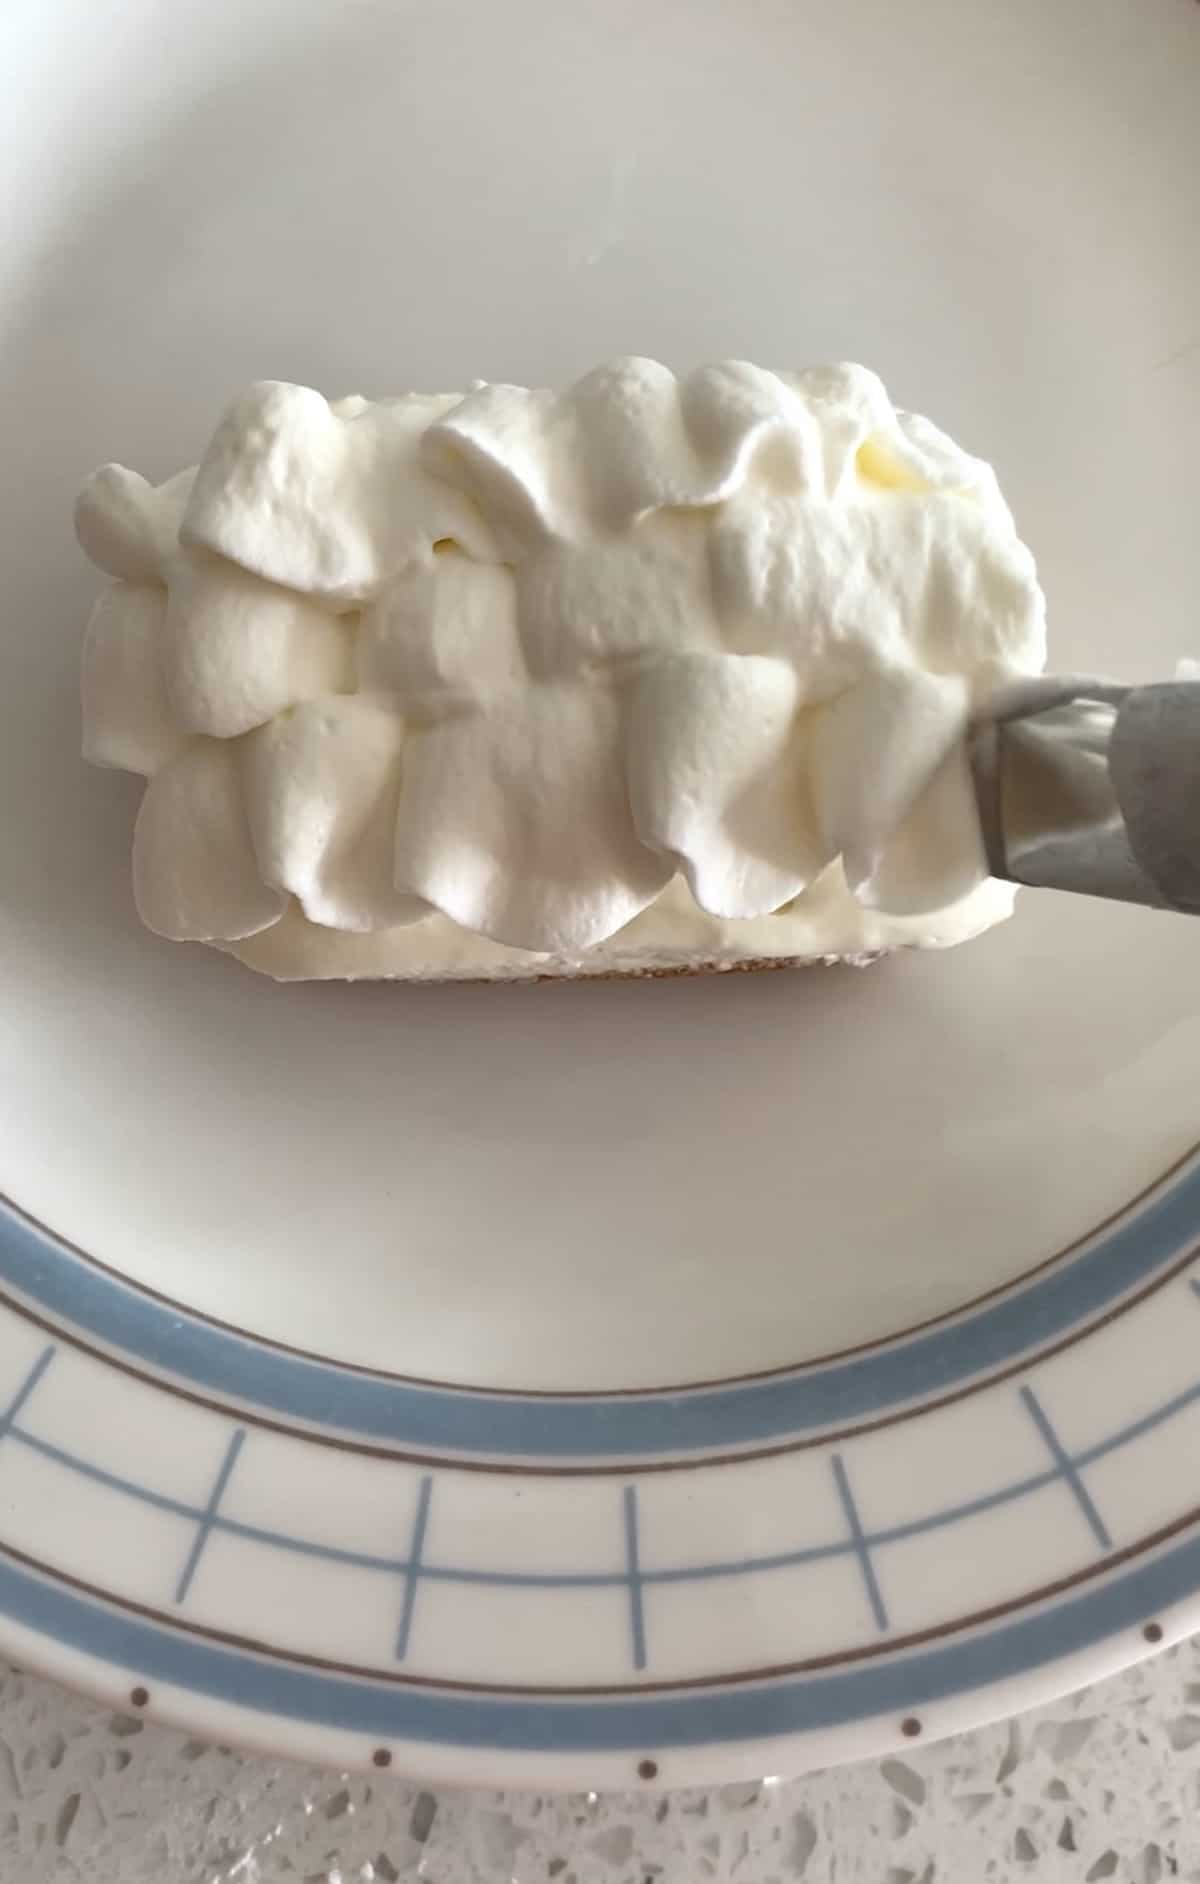 piping whipped cream onto cheesecake